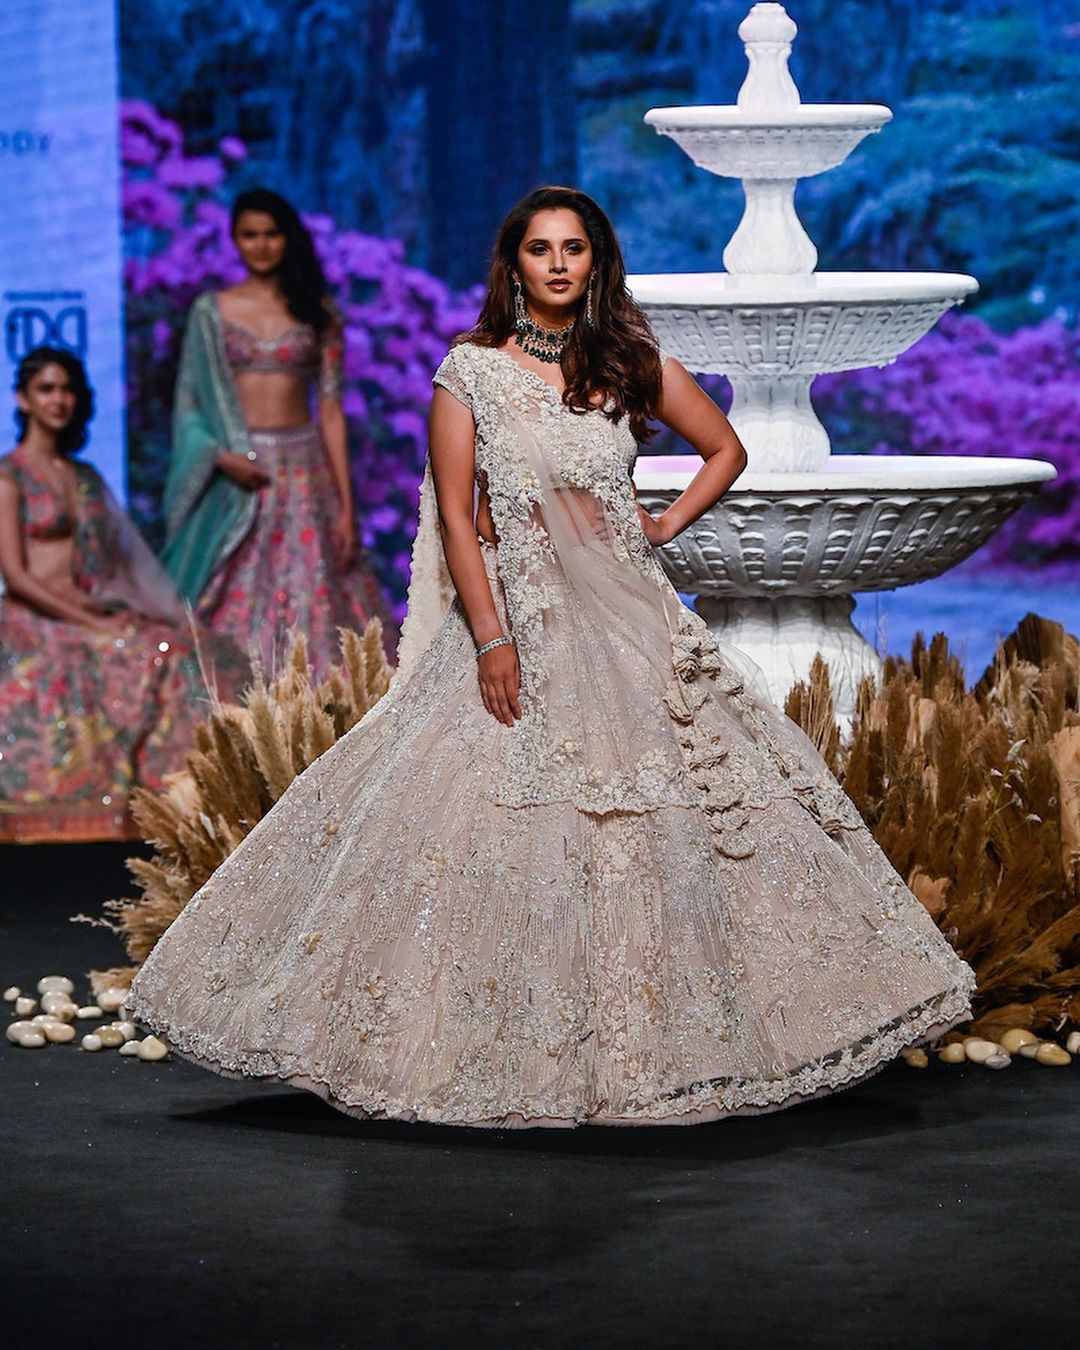 Lakme Fashion Week Bollywood Celebrities Spotted At The Runway - Glamorous Anushree In Fabulous Off-White Lehenga